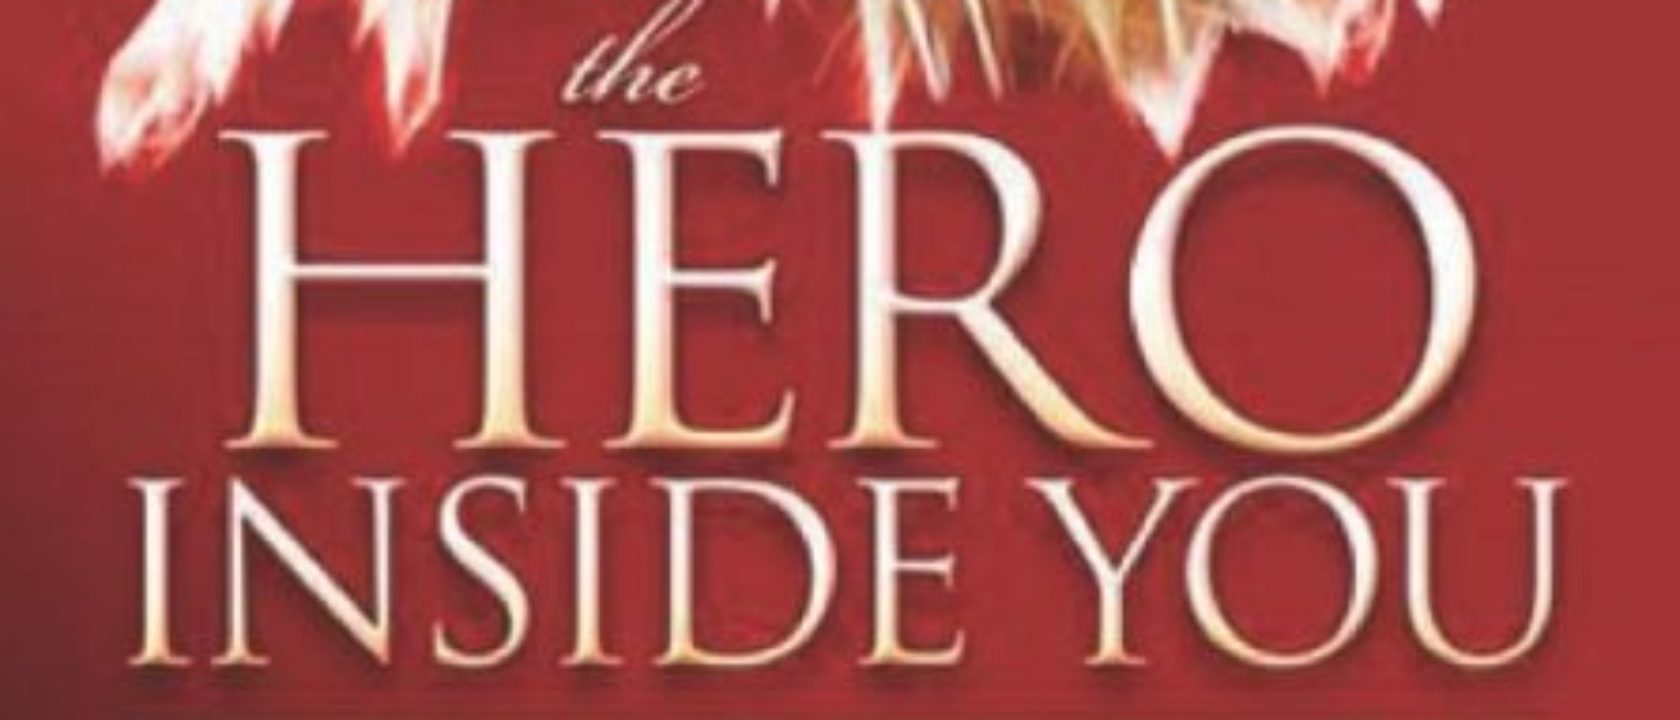 Hero inside you - Tony Edgell